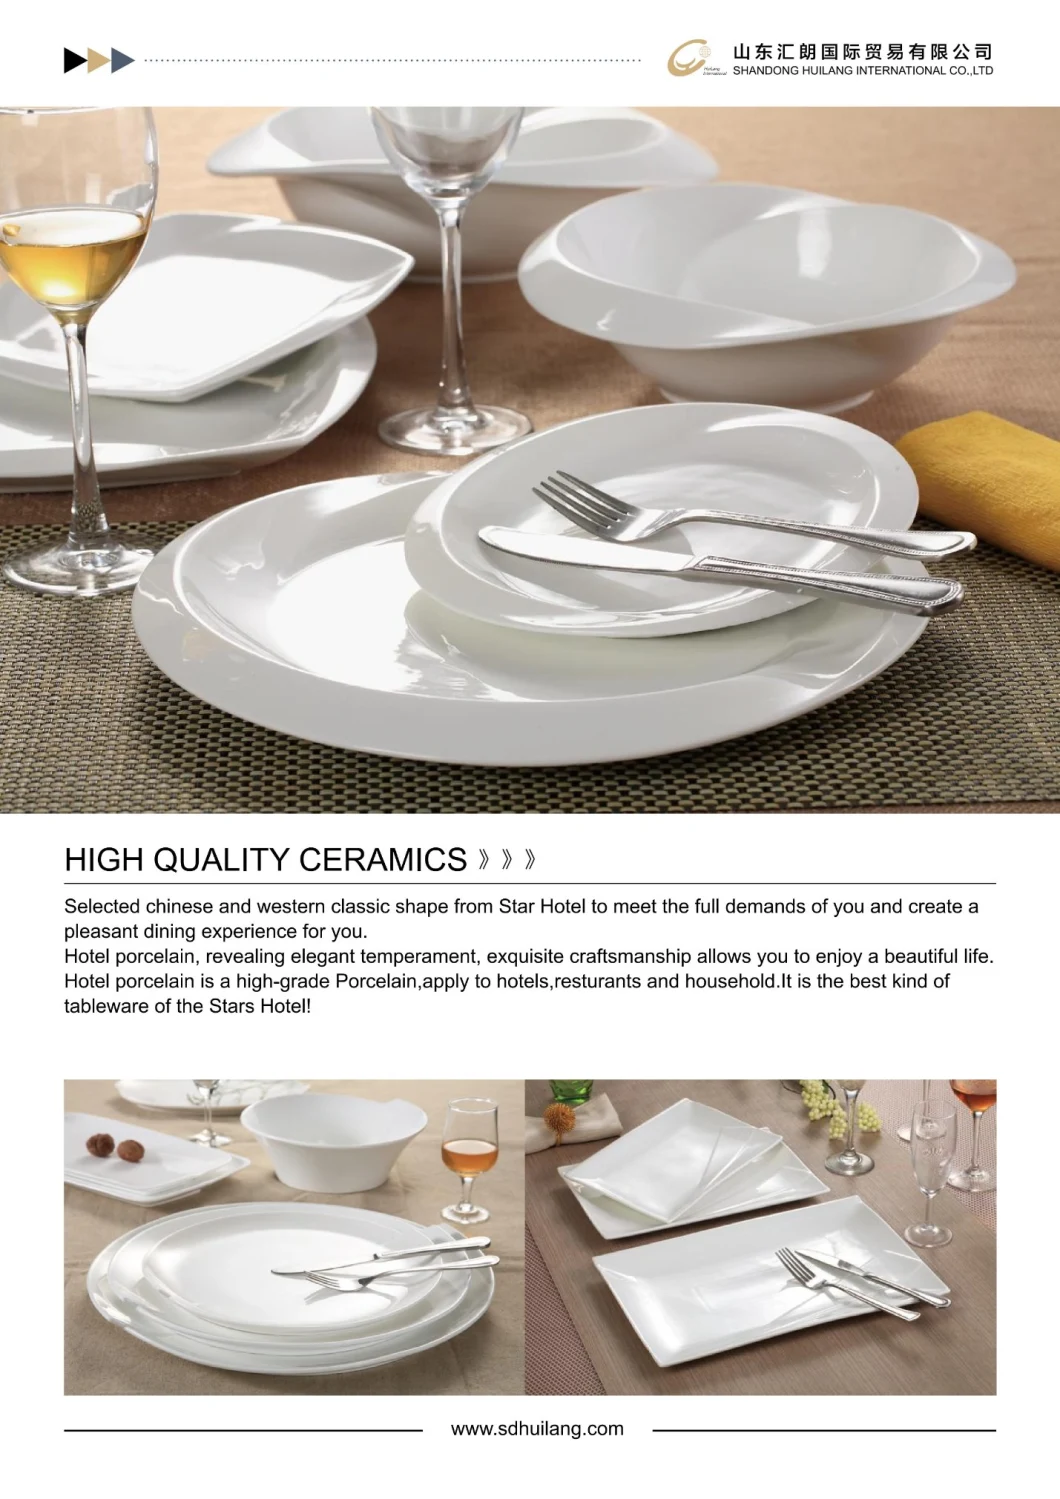 Wholesales Ceramic Dinner Plate Porcelain Dishes for Home/Hotel/Restaurant